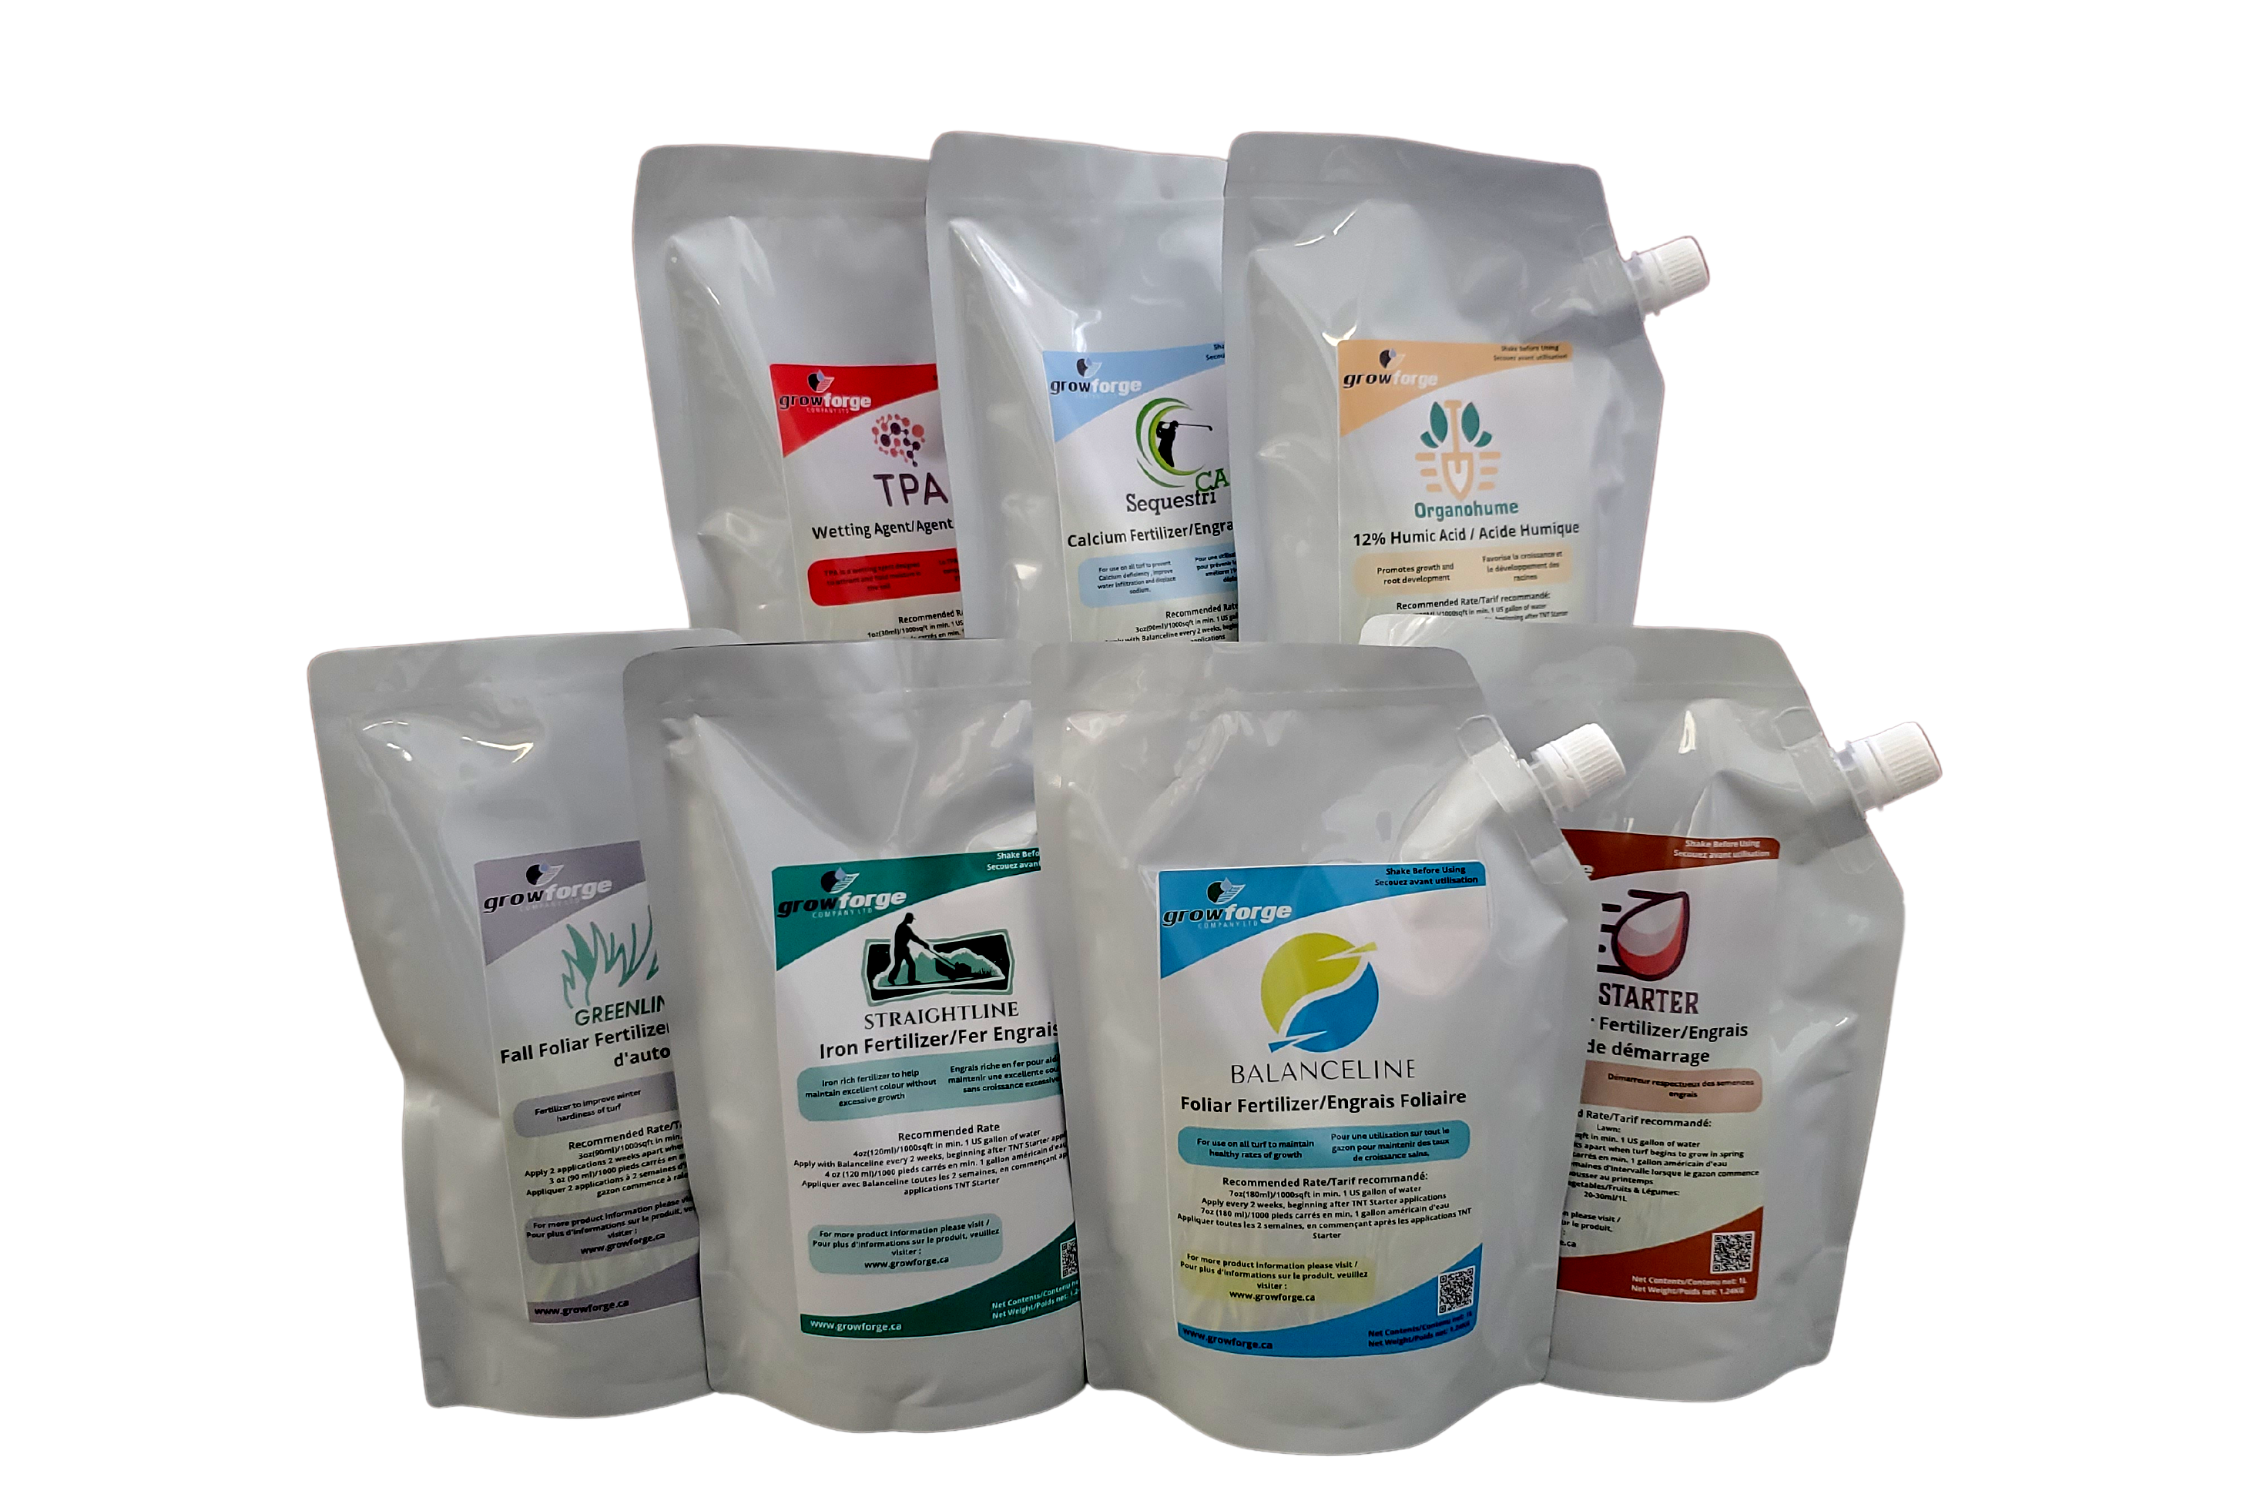 All Lawn Fertilizer Products